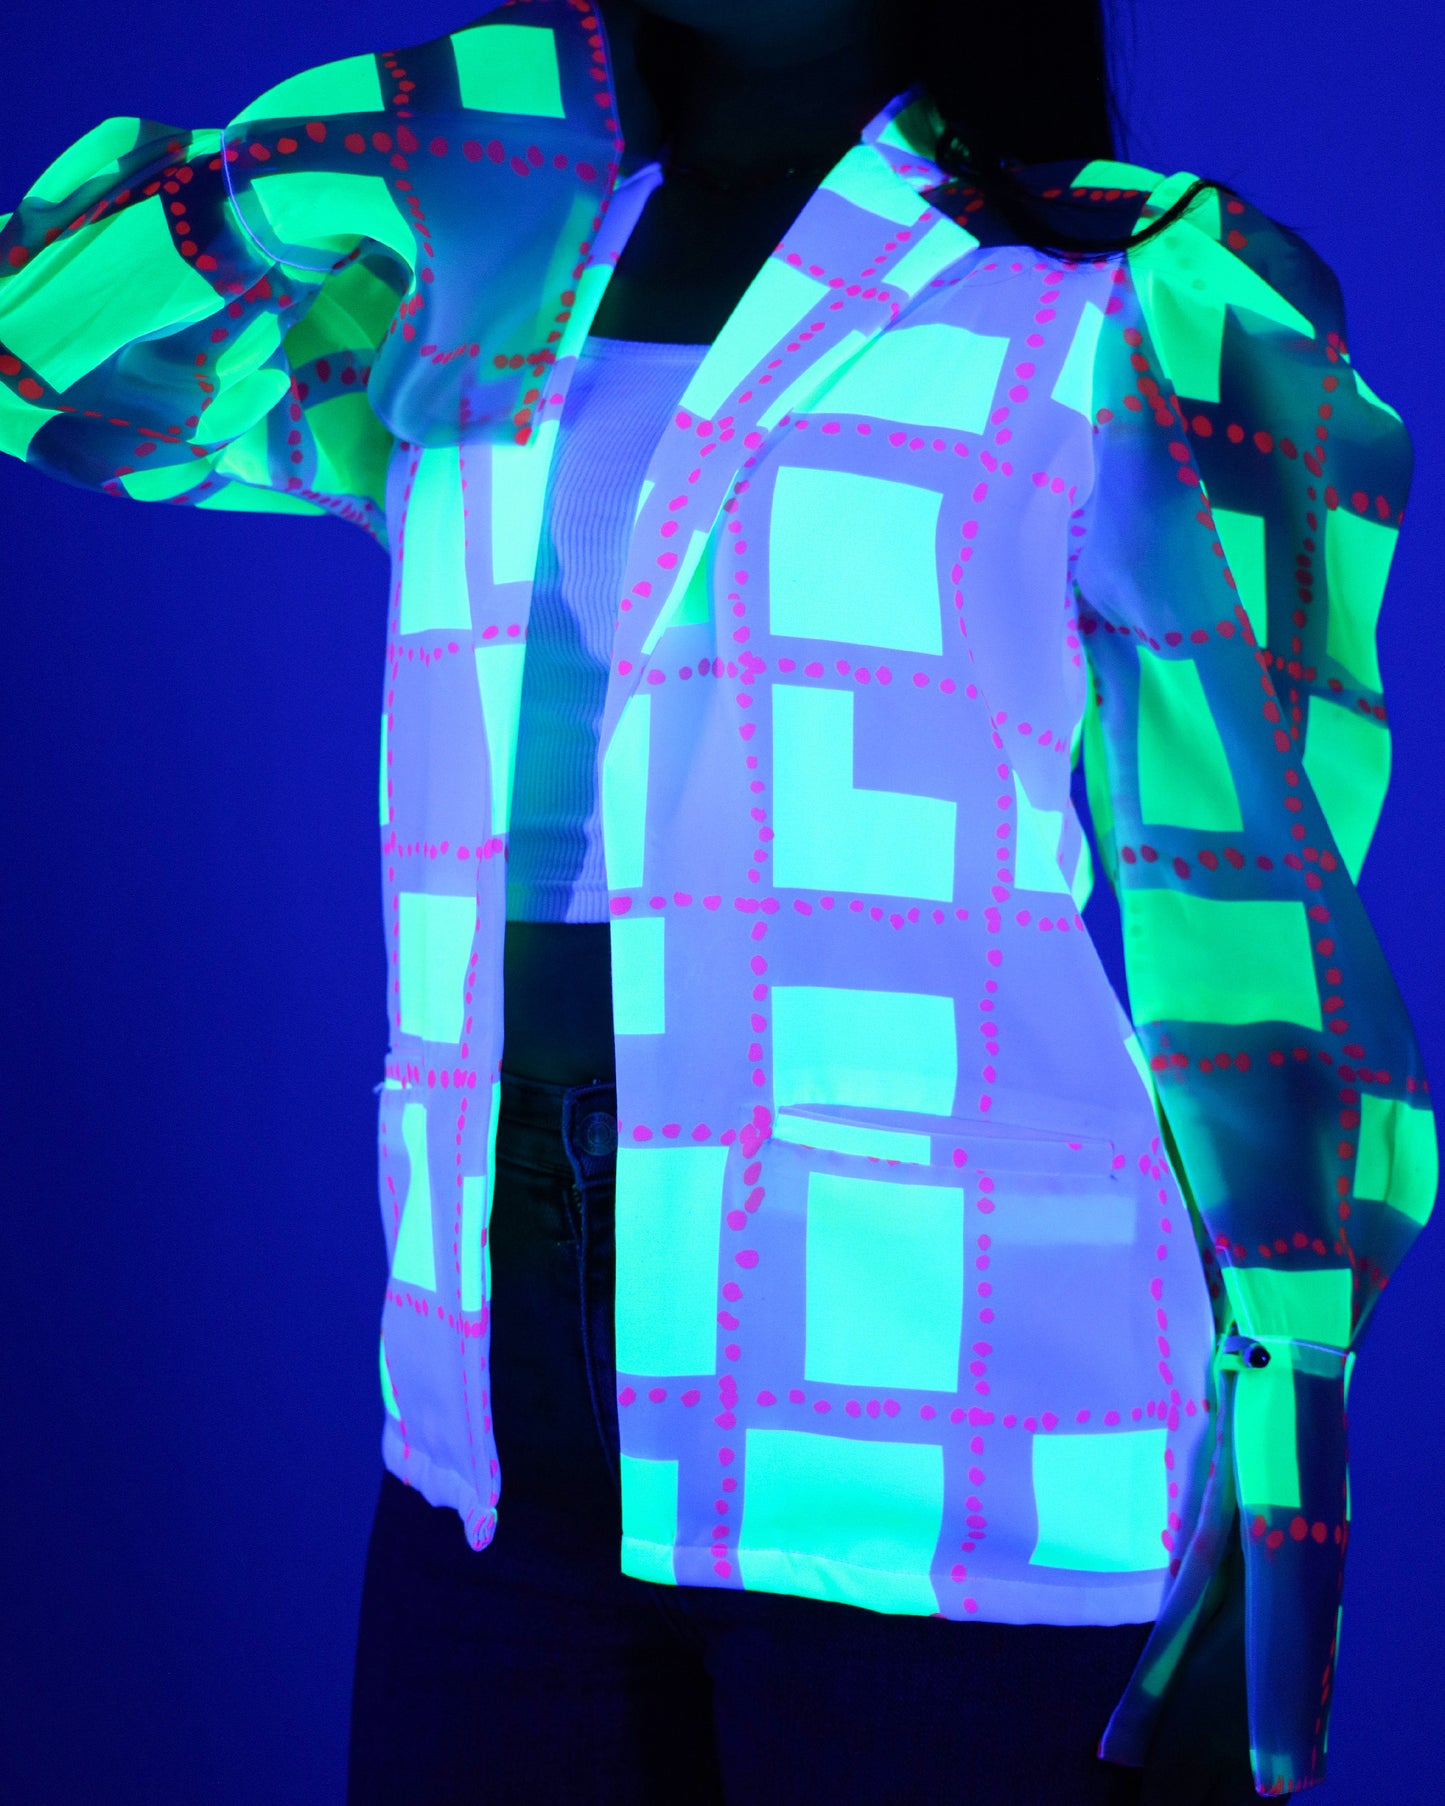 Own Your Night: Neon Light Women's Jacket